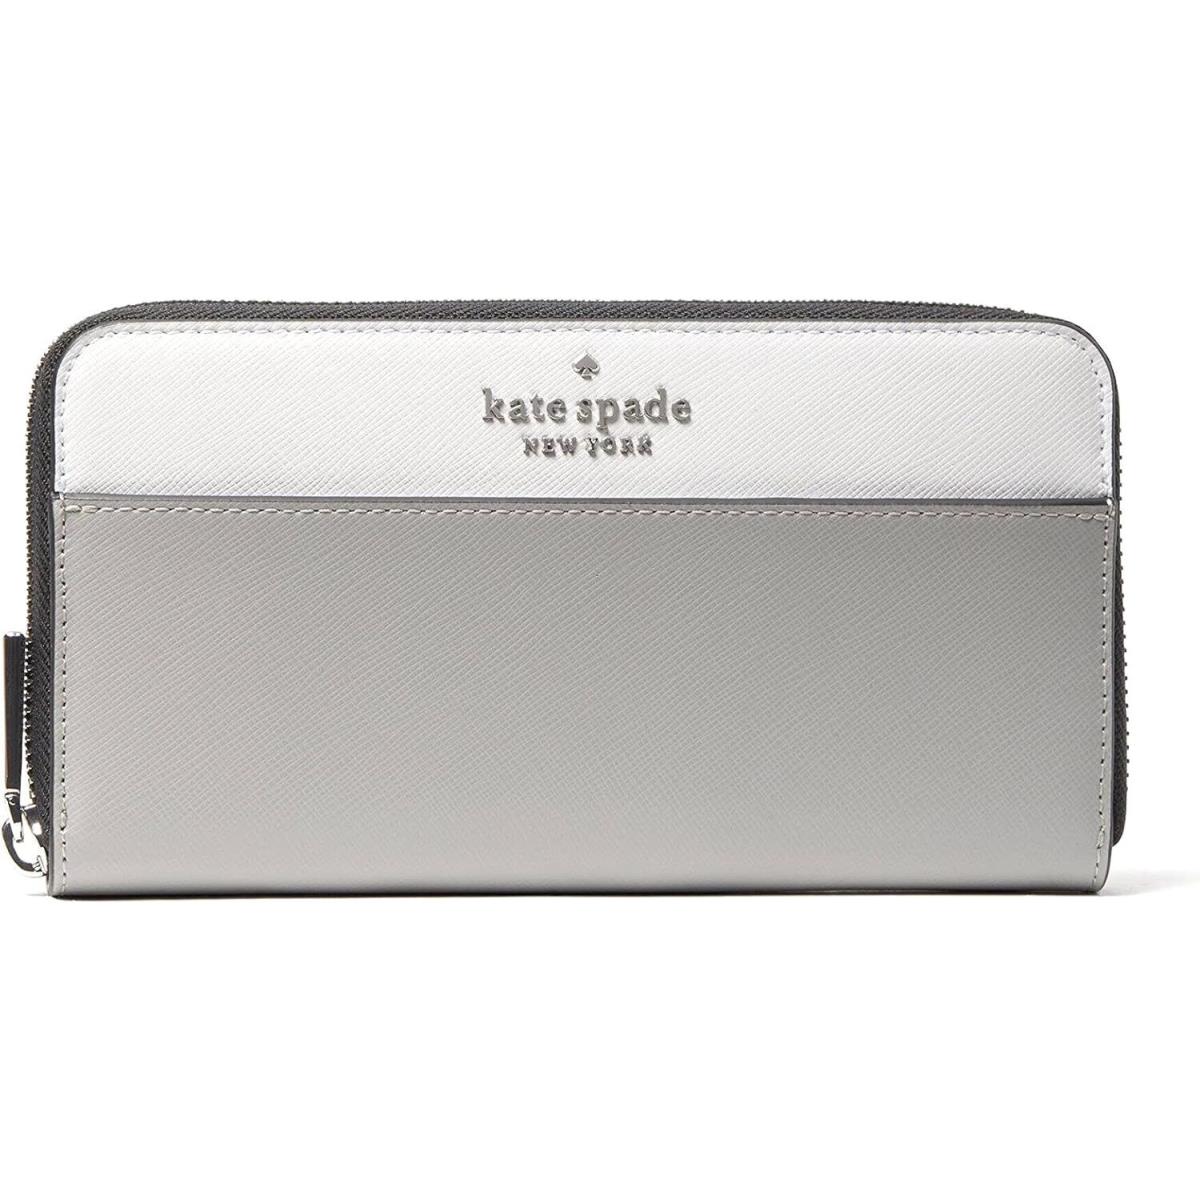 Kate Spade New York Staci Colorblock Large Continental Wallet in Nimbus Grey